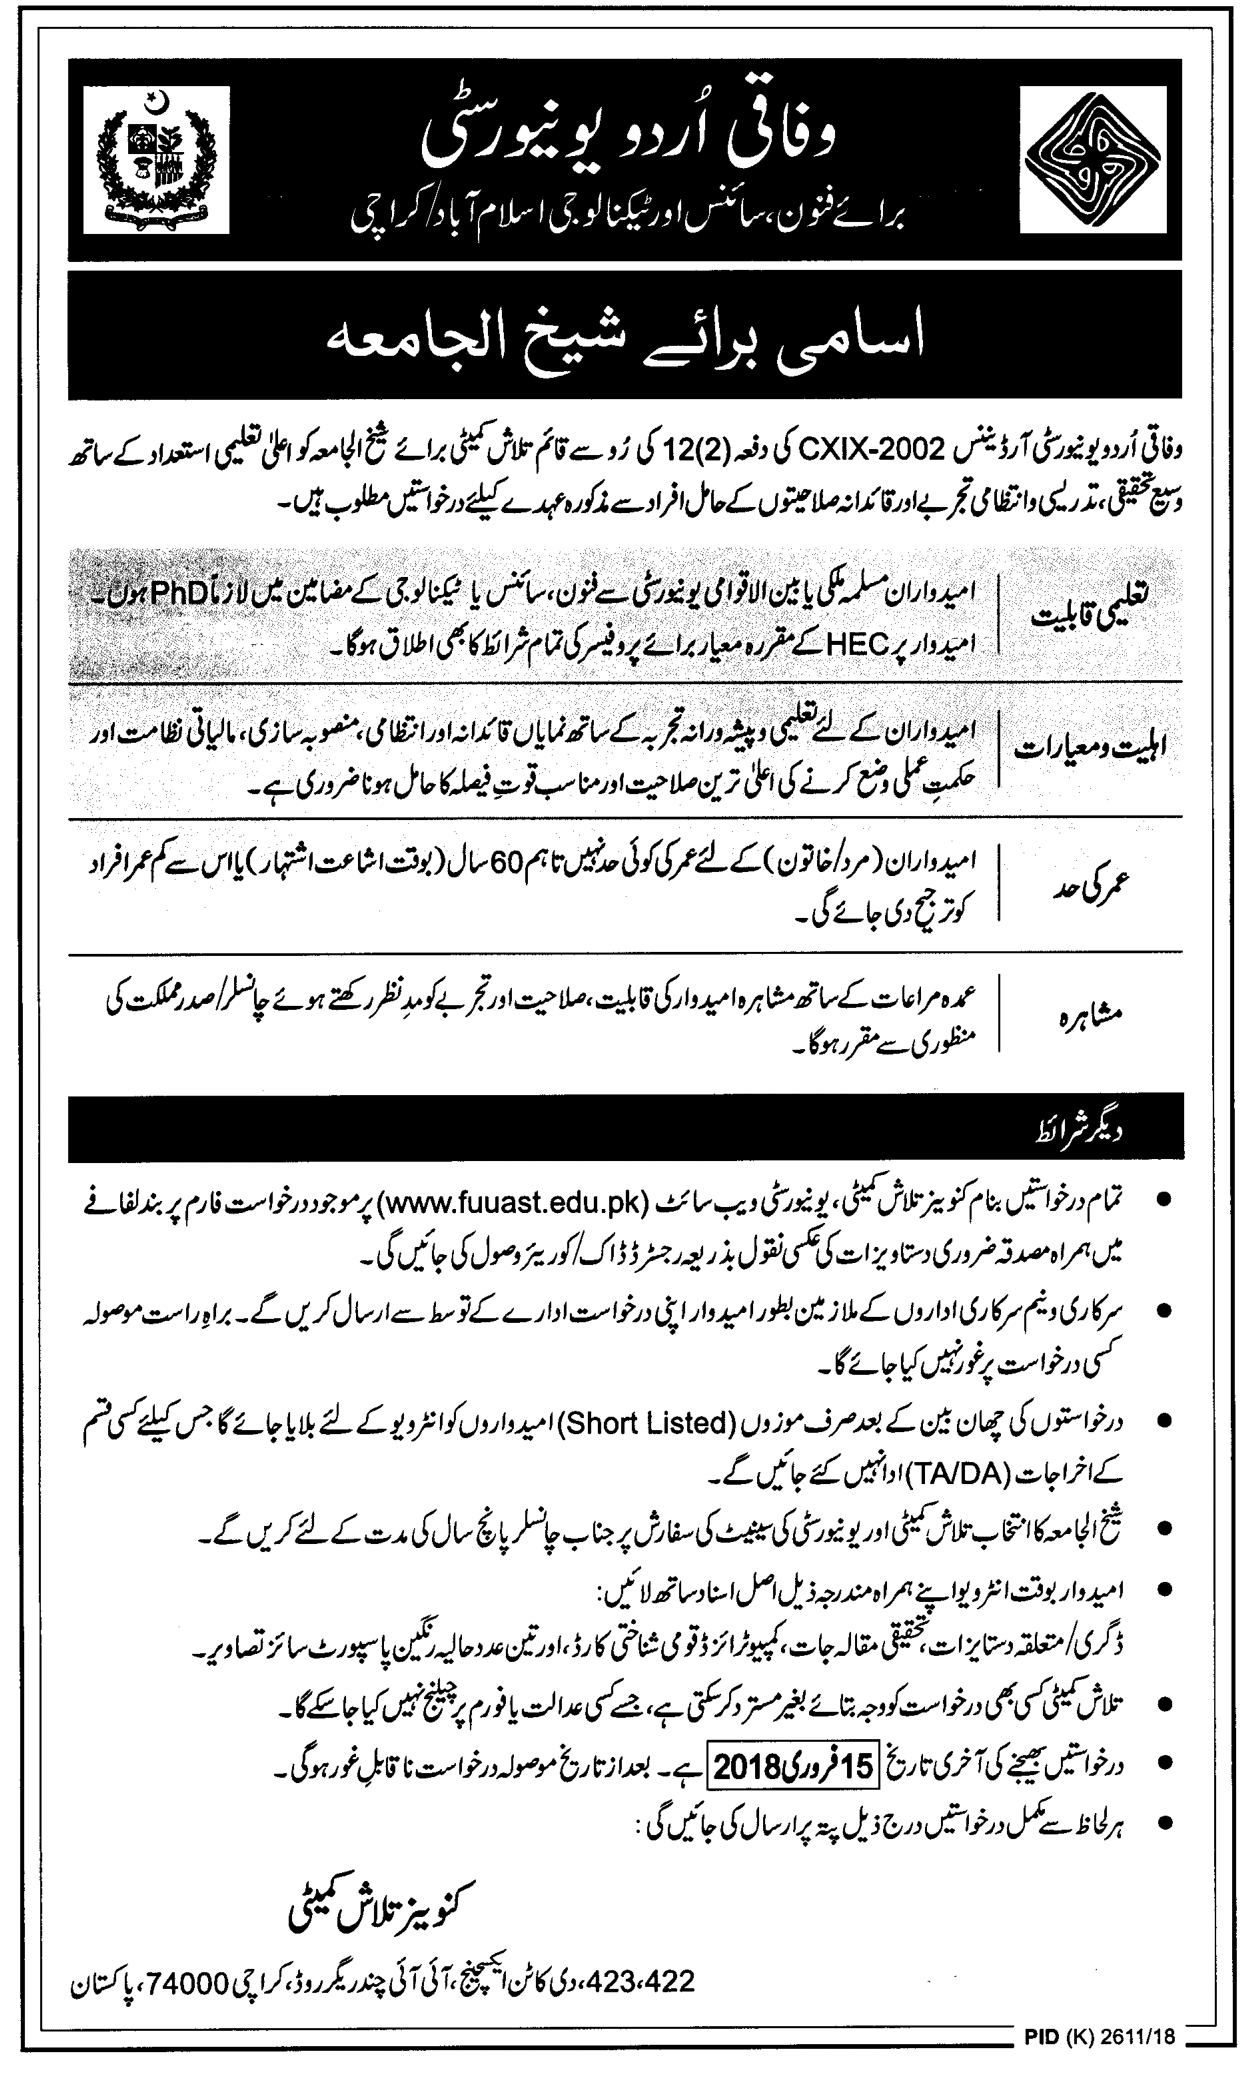 advertisement essay in urdu